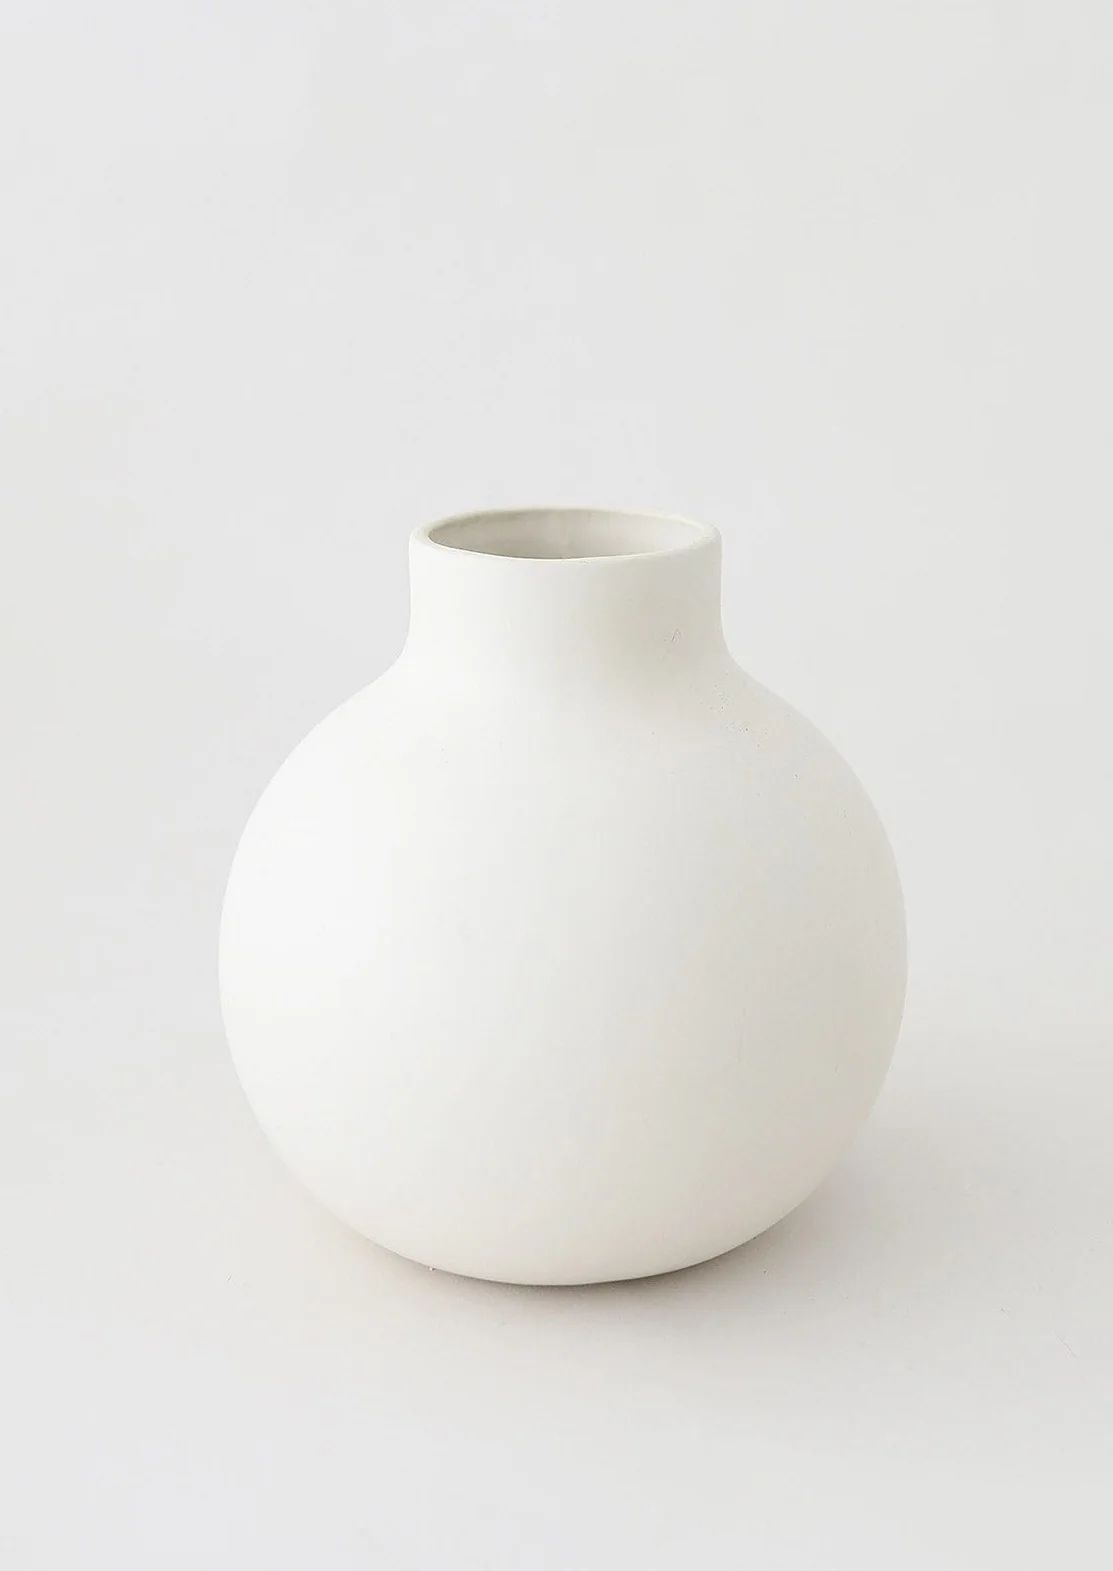 Afloral Creamy White Round Ceramic Vase - 8" | Afloral